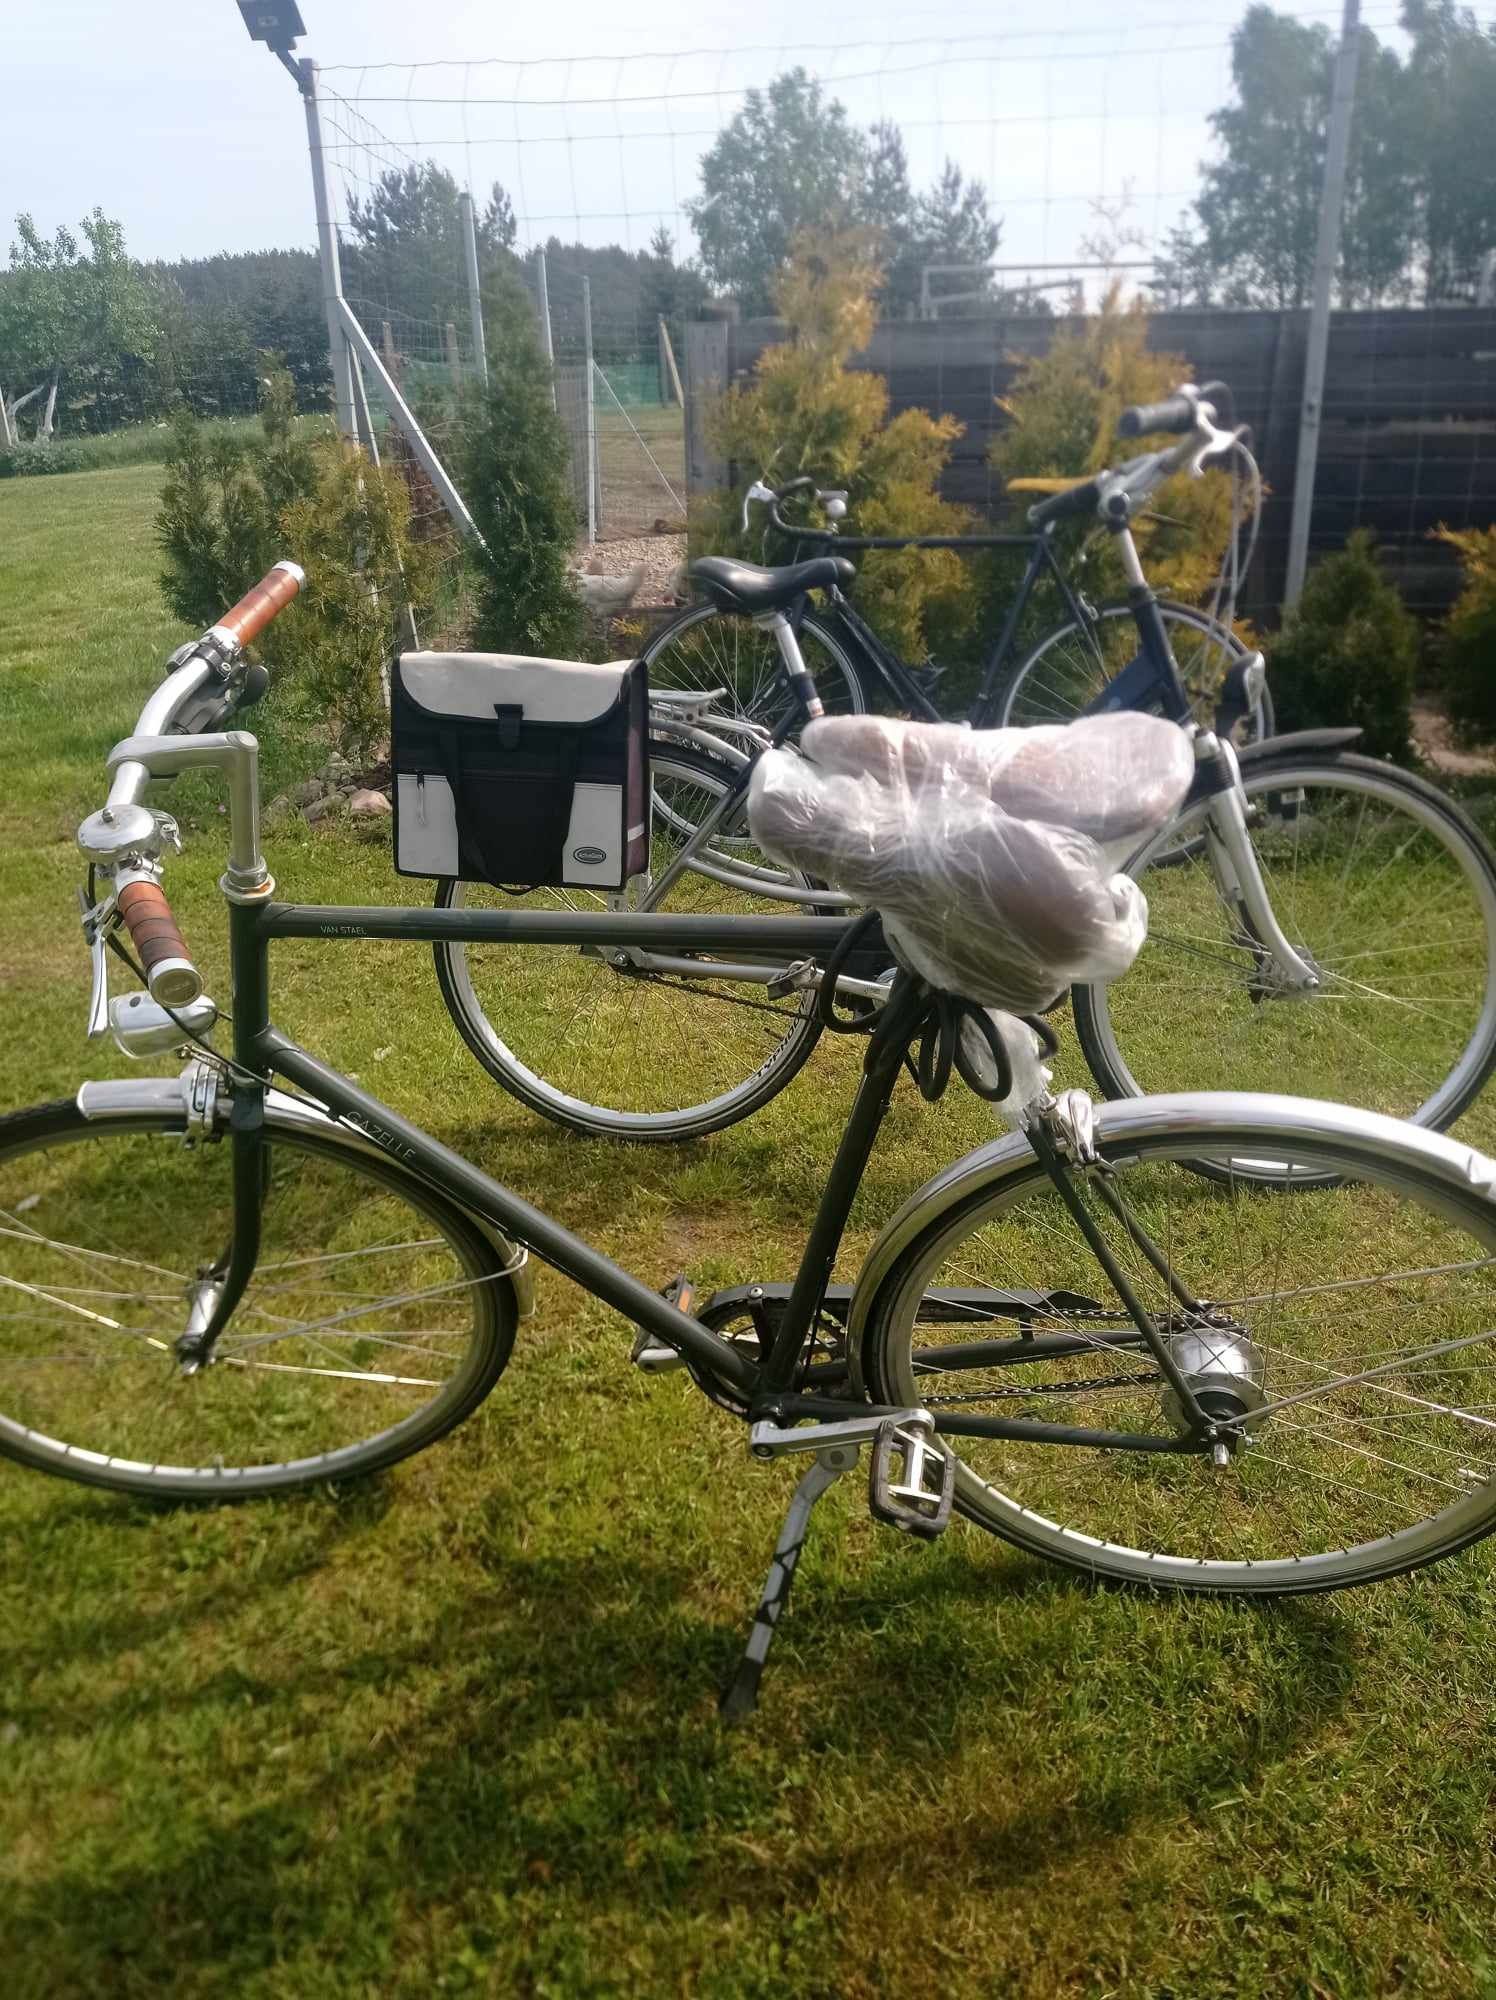 Sprzedam rower holenderski Batavus